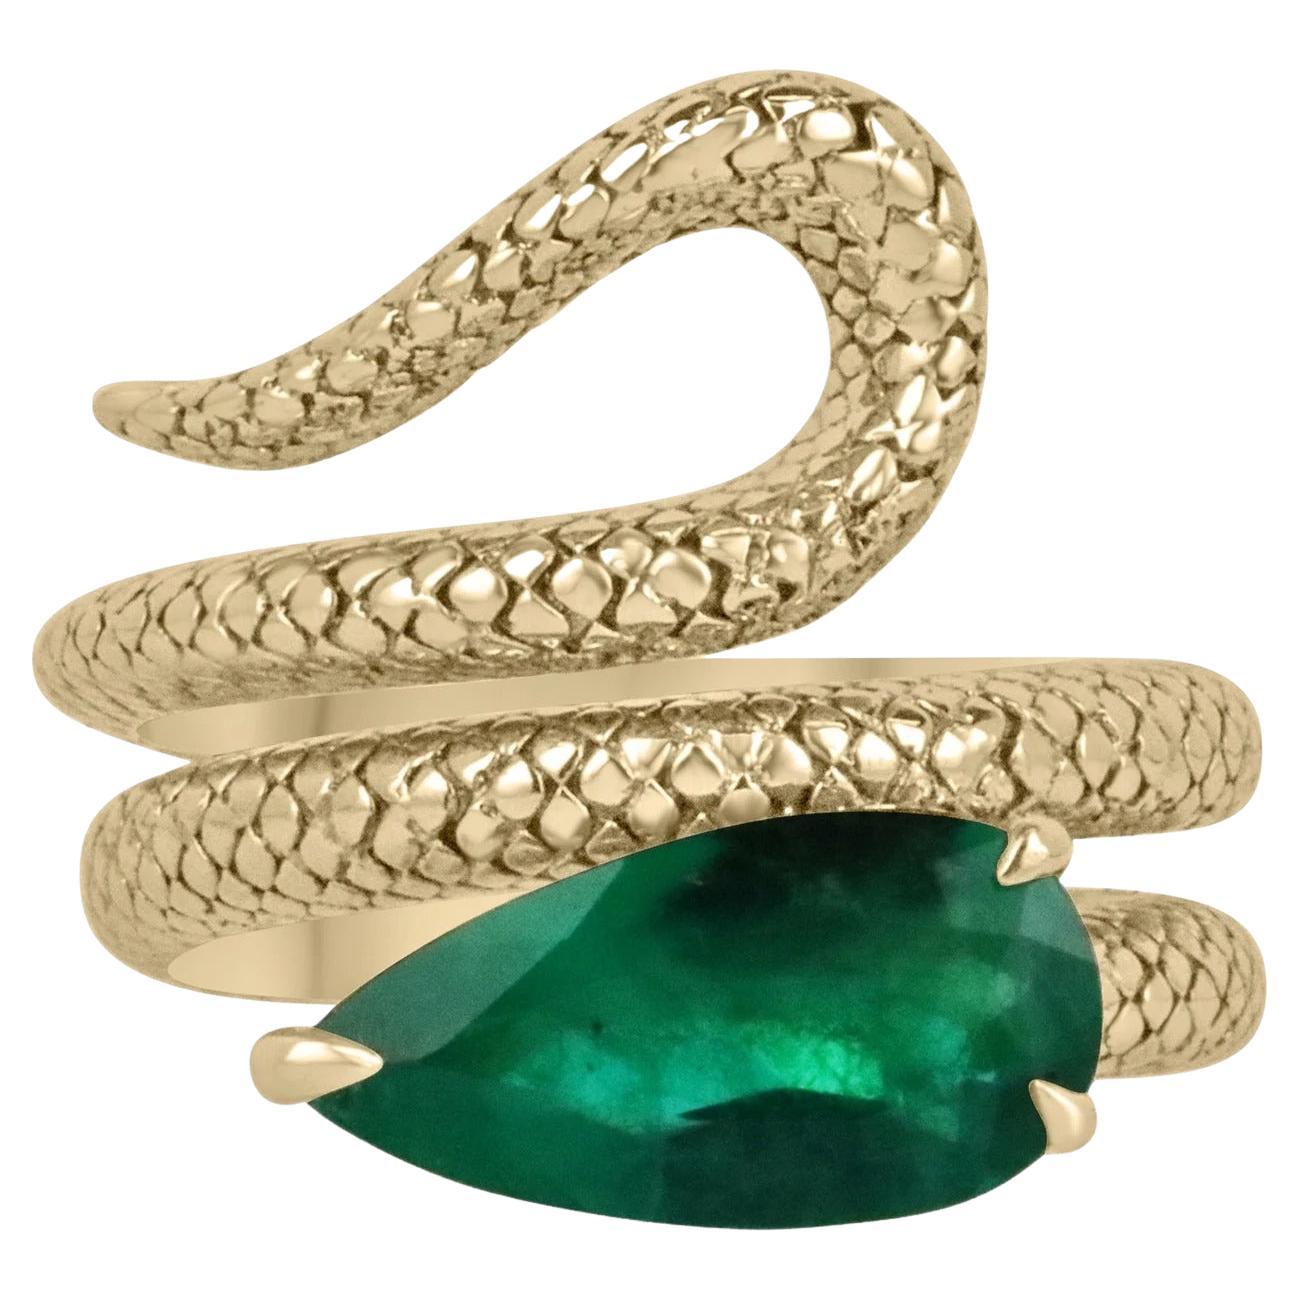 2,18 Karat AAA Qualität kolumbianischer Smaragd-Perlenschliff Gold umwickelter Schlangenring 18K